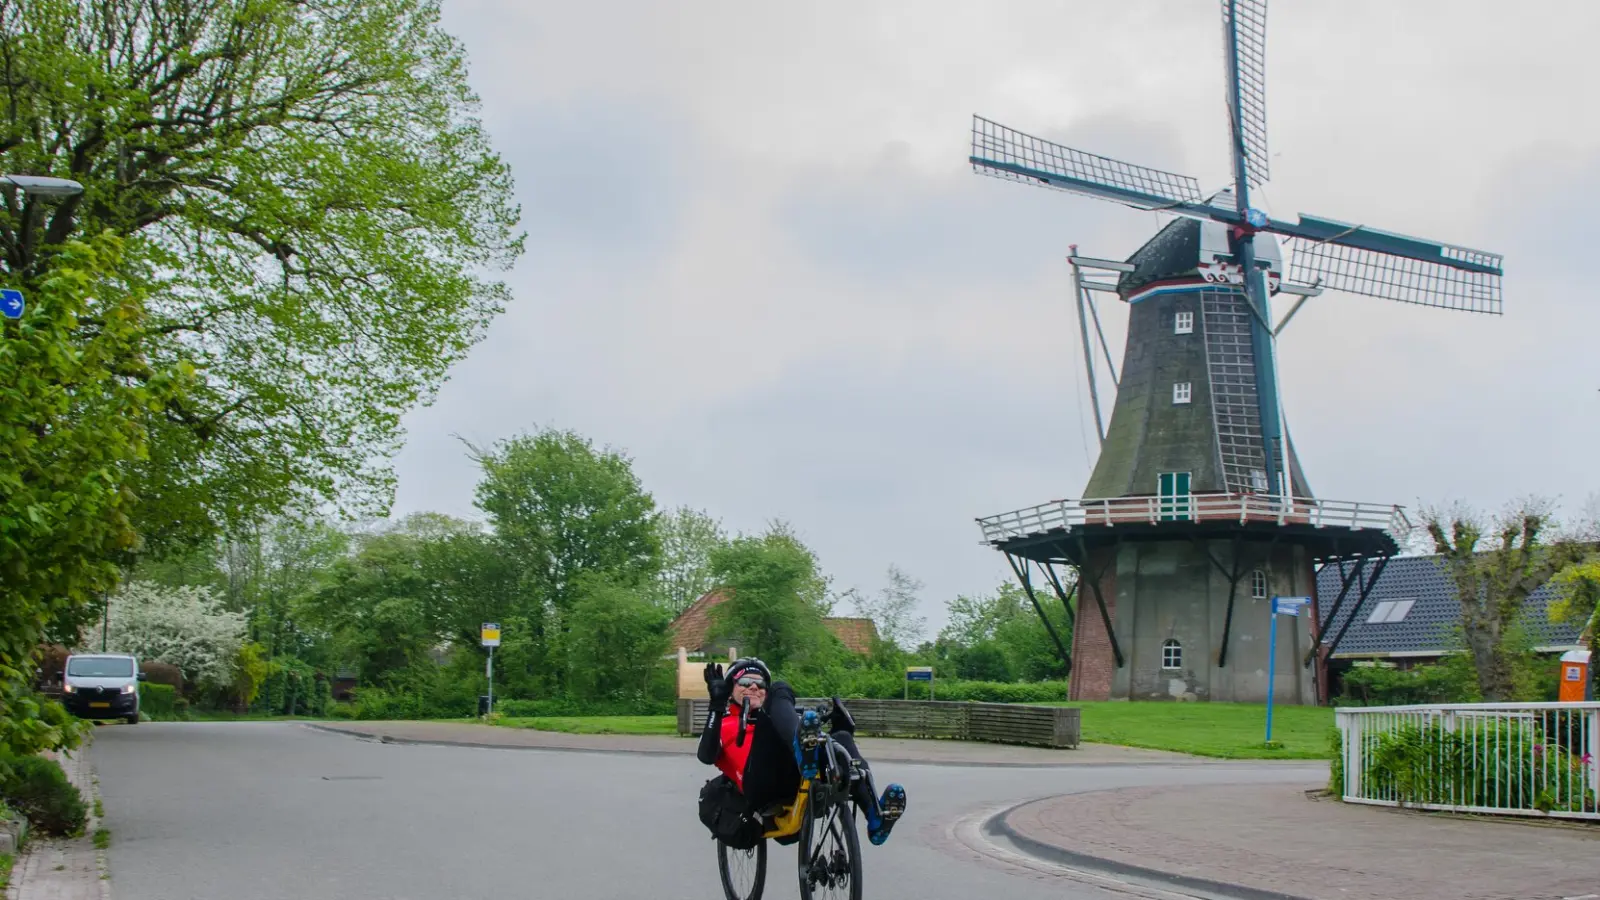 Bikes of Race Around The Netherlands 2020